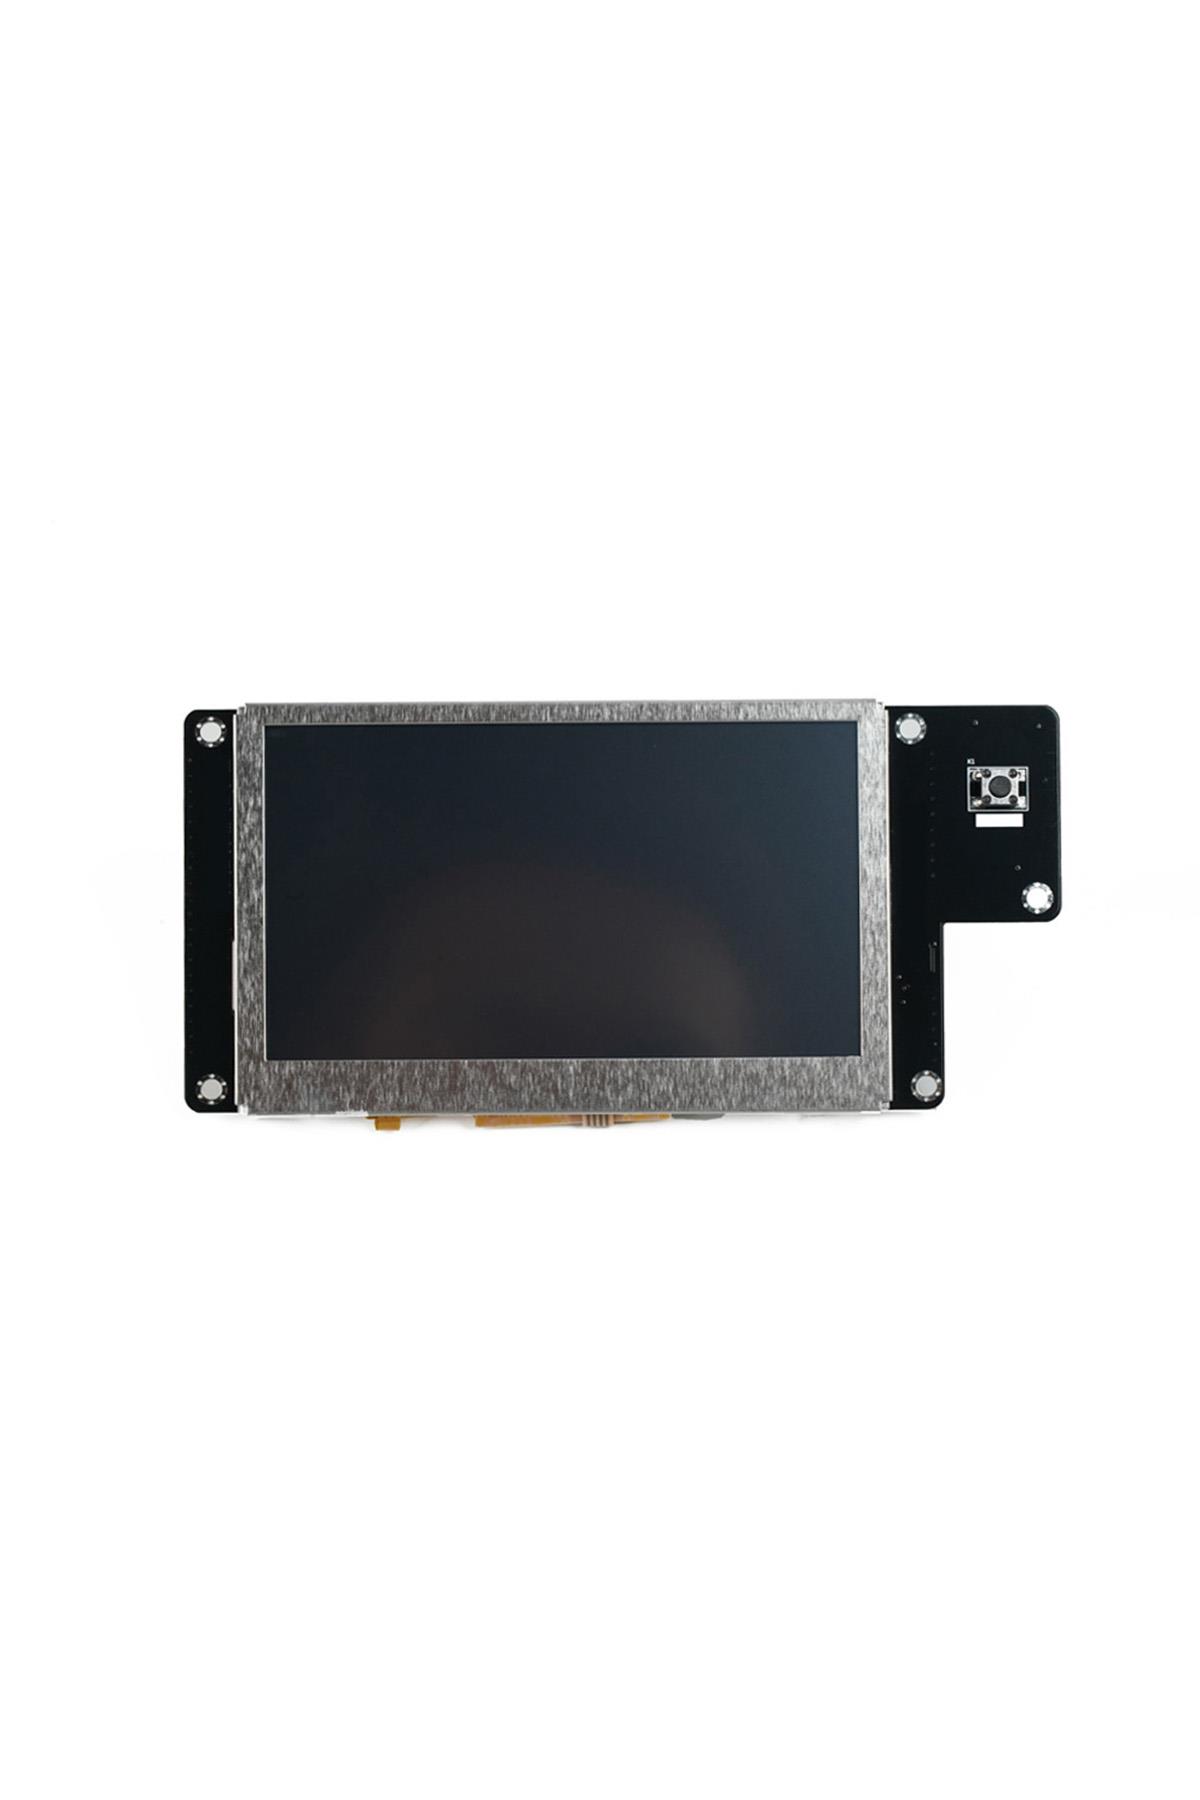 FLASHFORGE Adventurer 5M Pro Touch Screen Assembly